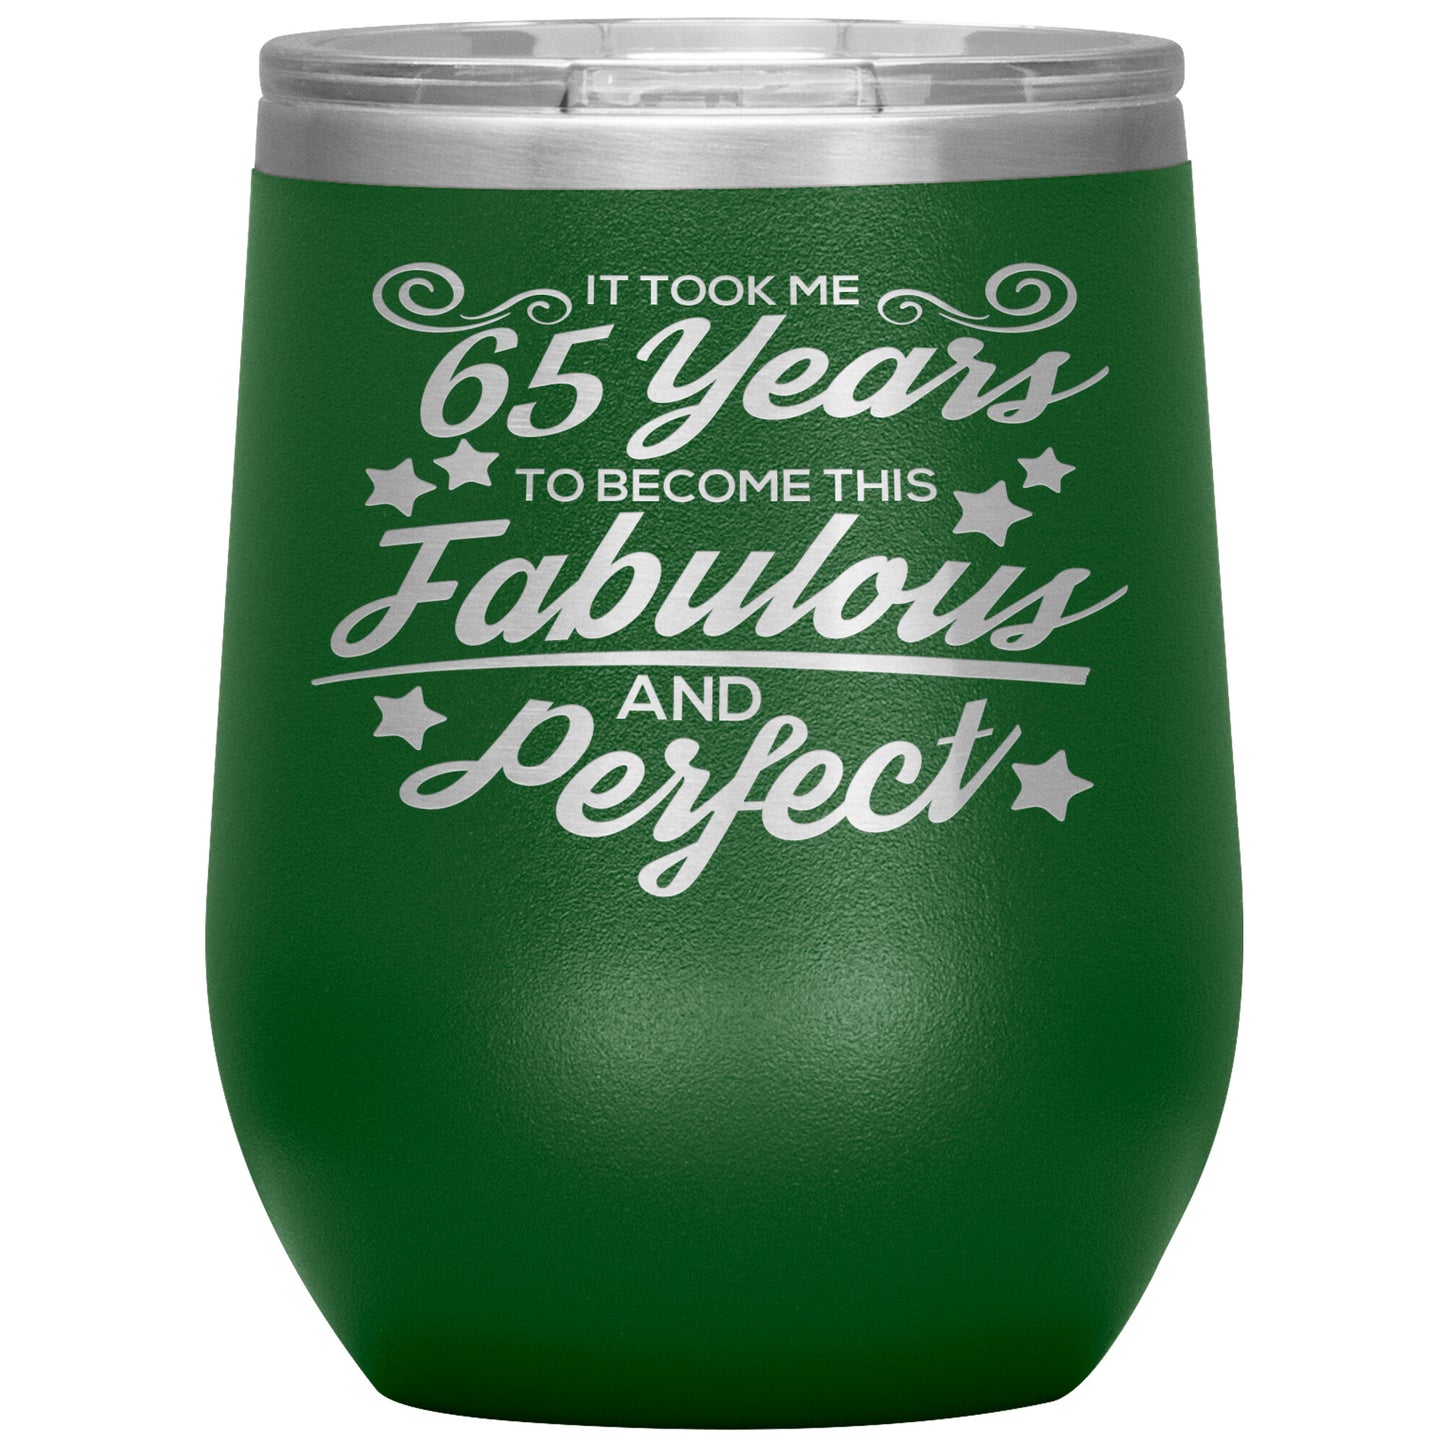 65 Years Fabulous & Perfect Tumbler